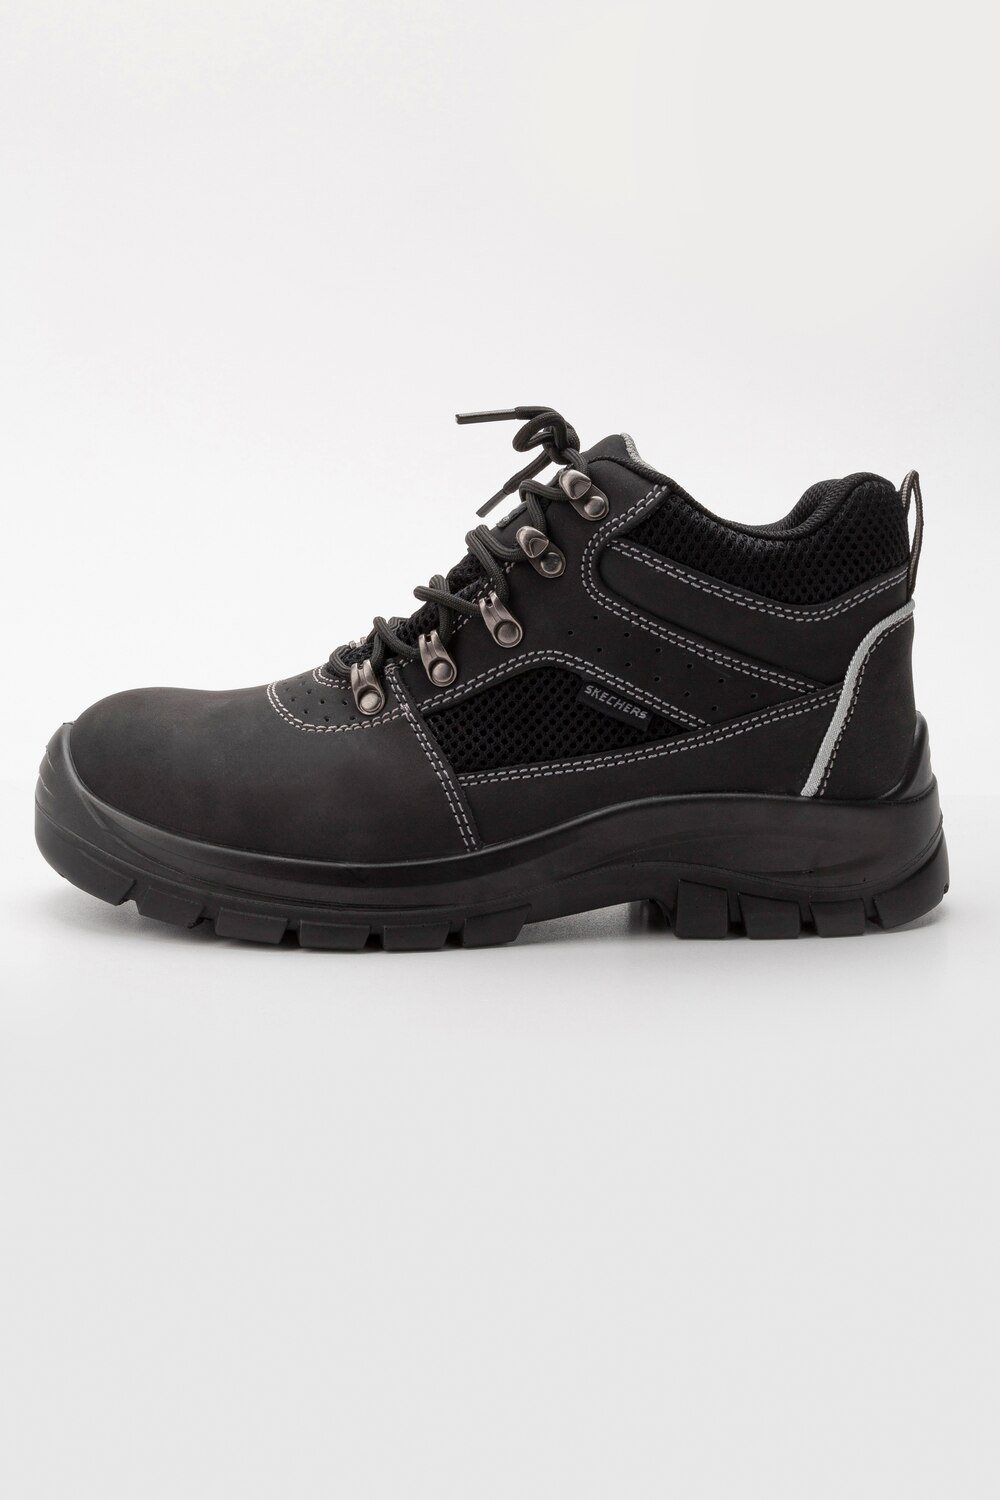 Plus Size Work shoes for men, Man, black, size: 9,5, leather, JP1880